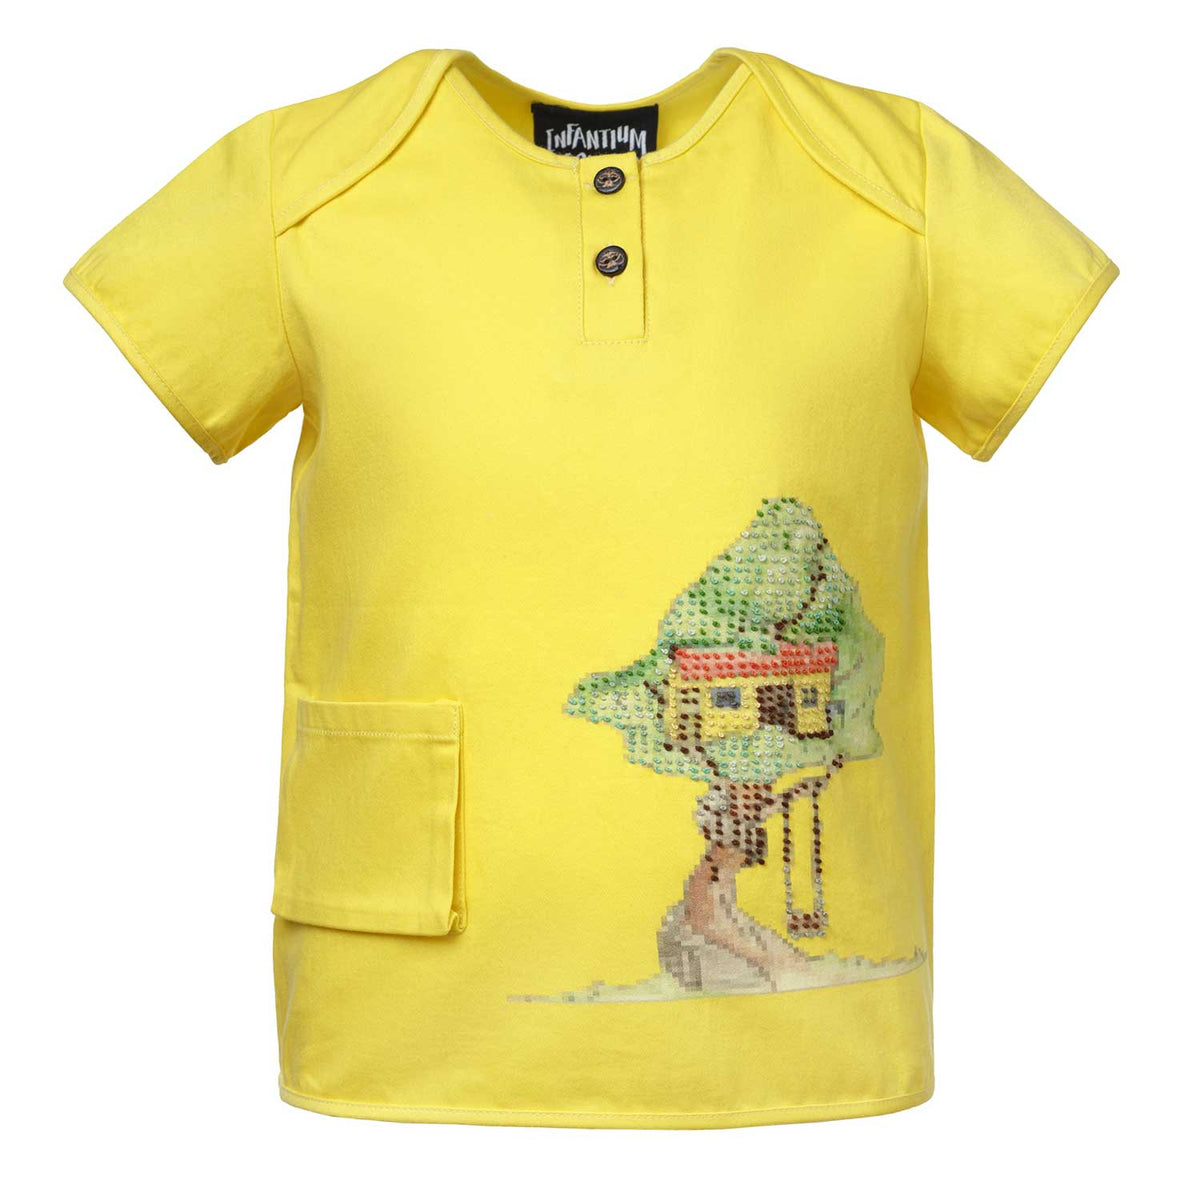 The Canopy T-Shirt - Infantium Victoria